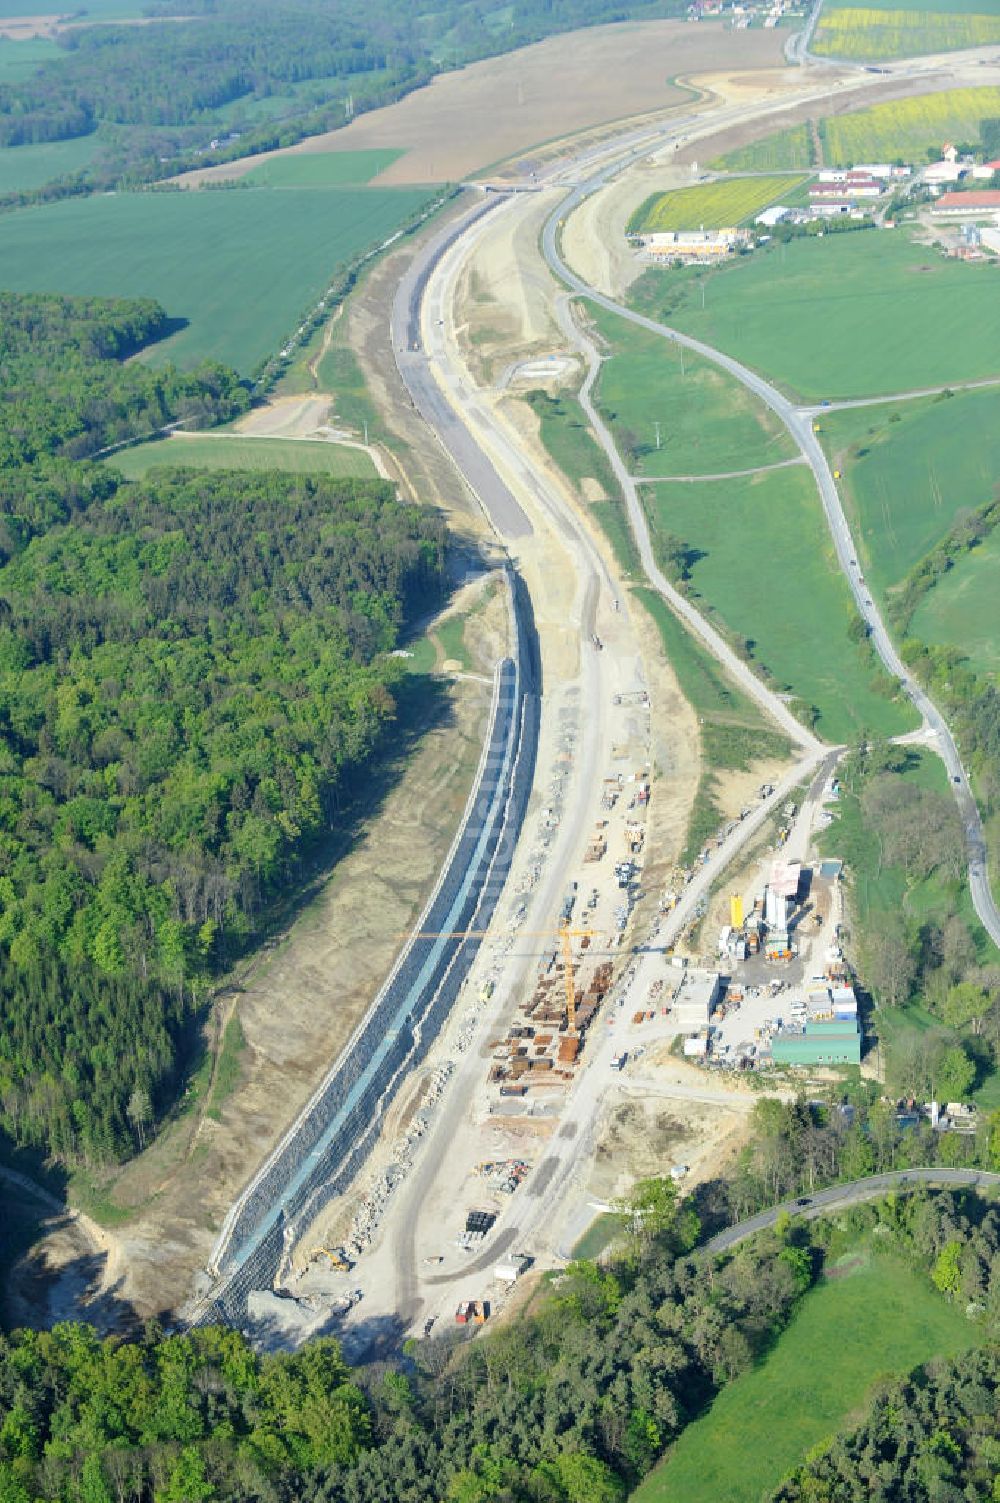 Luftbild Jena - Baustelle Jagdbergtunnel Autobahnverlegung Europastrasse E40 A4 bei Jena